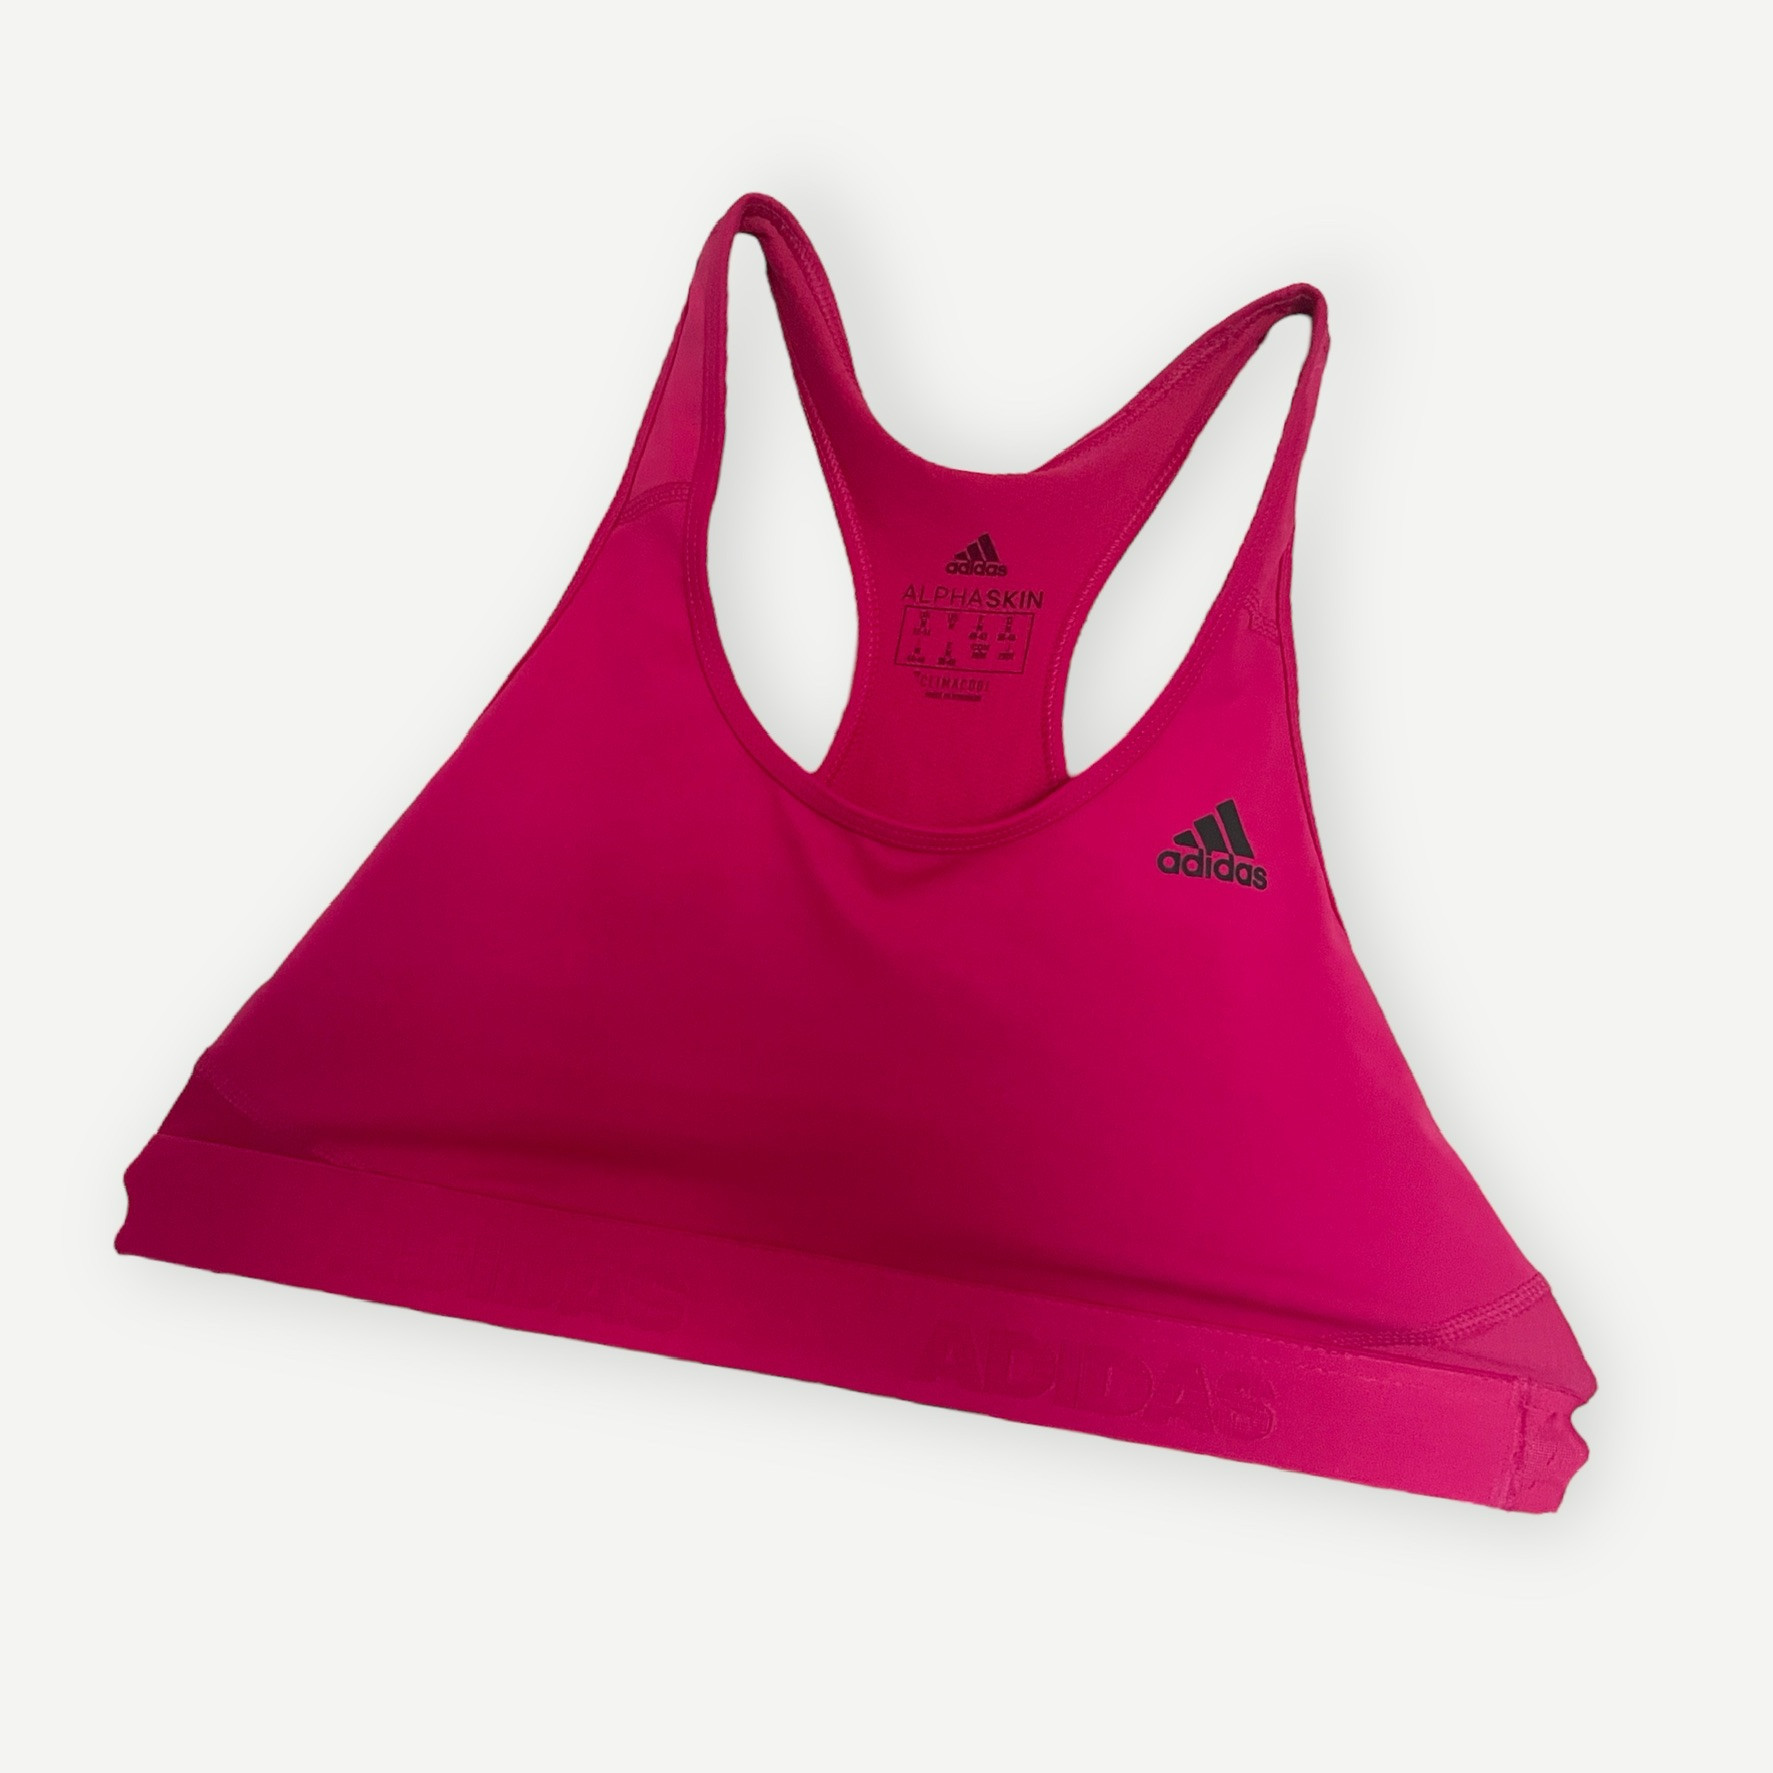 Adidas pink bra